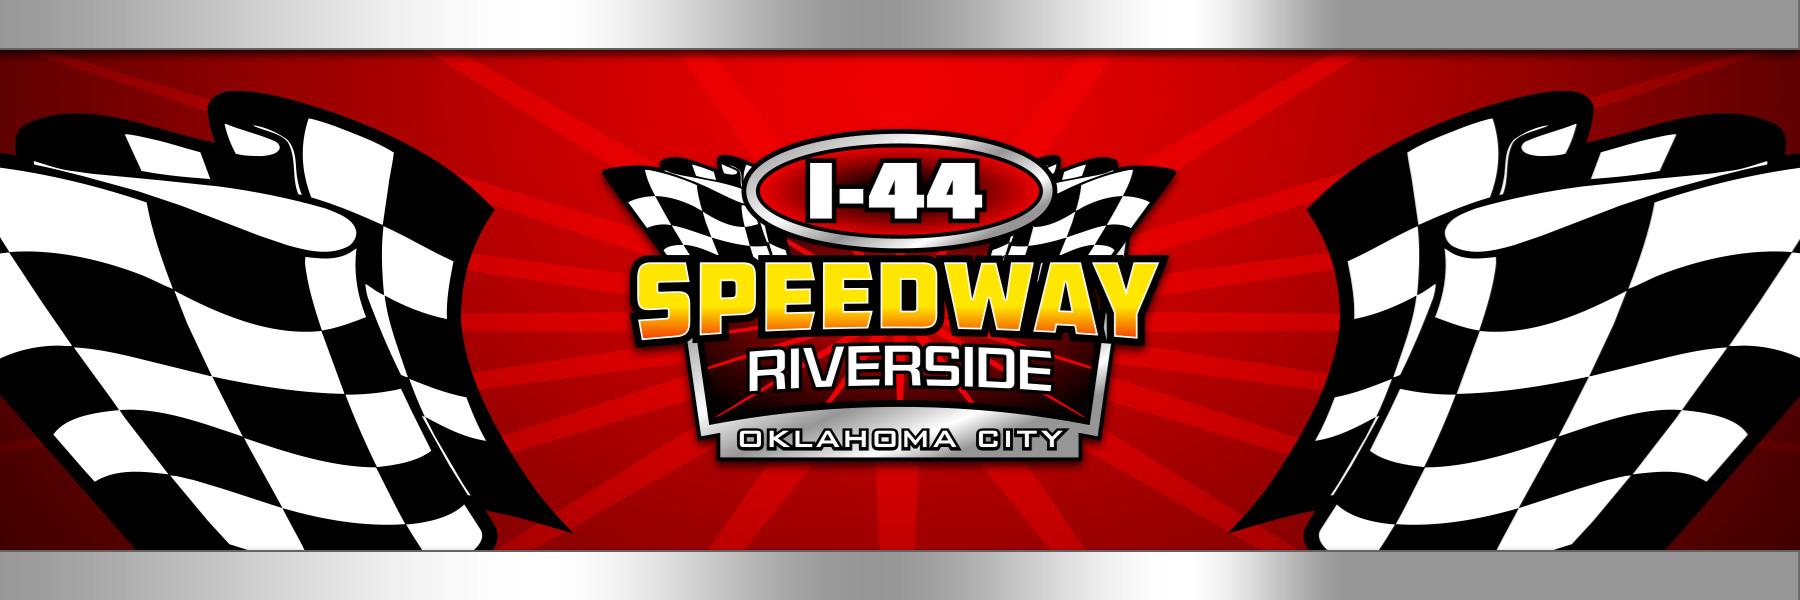 5/29/2020 - I-44 Riverside Speedway